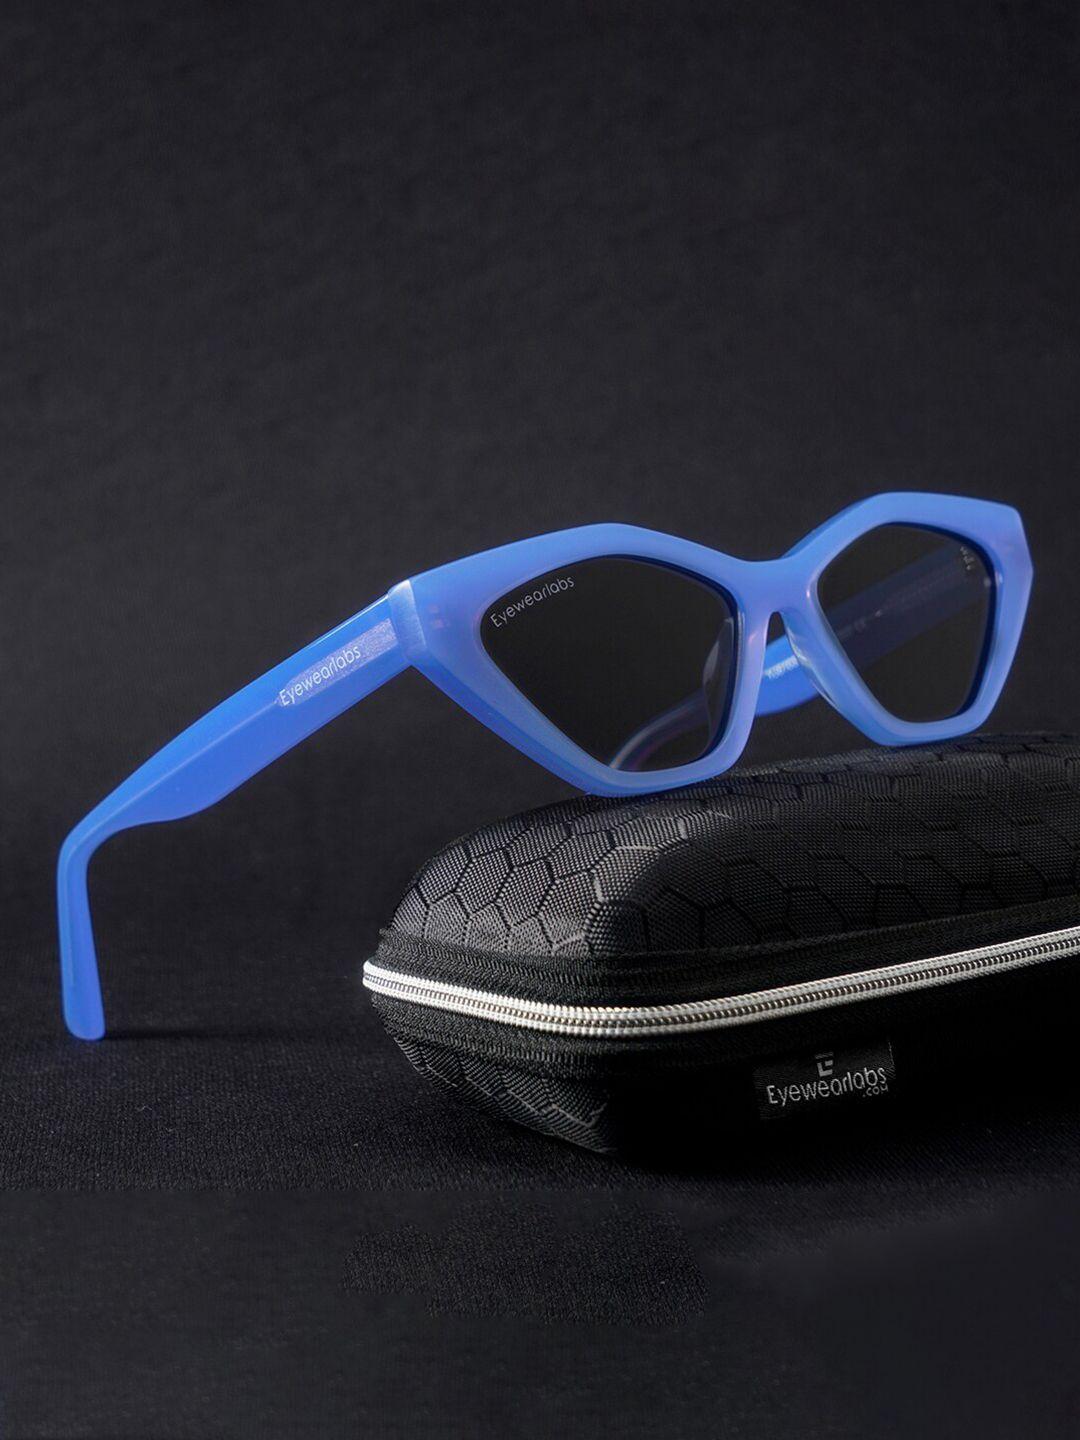 eyewearlabs women lens & cateye sunglasses with uv protected lens cbellablsc2el1179